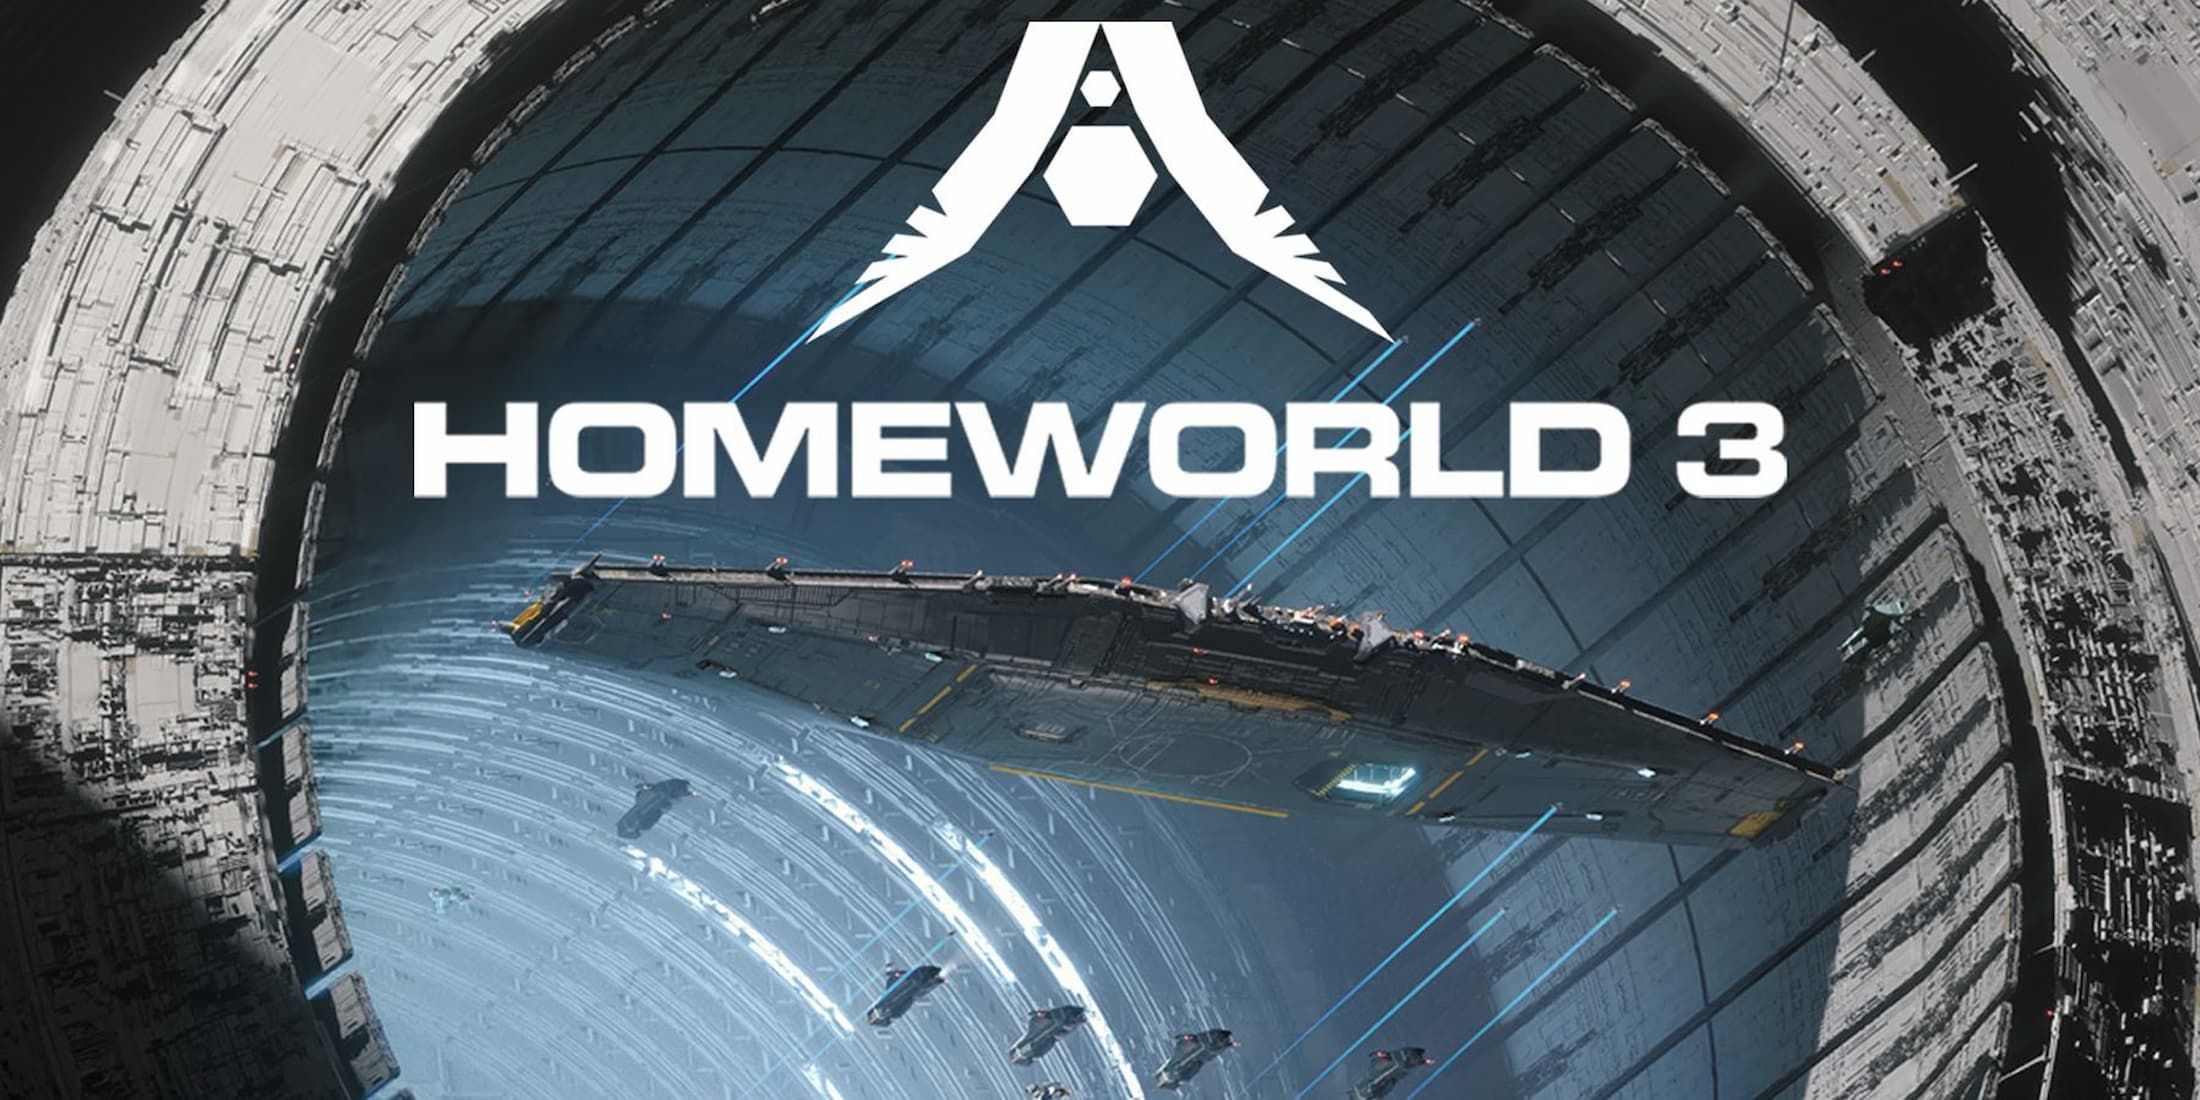 The Homeworld 3 Logo & A Mothership